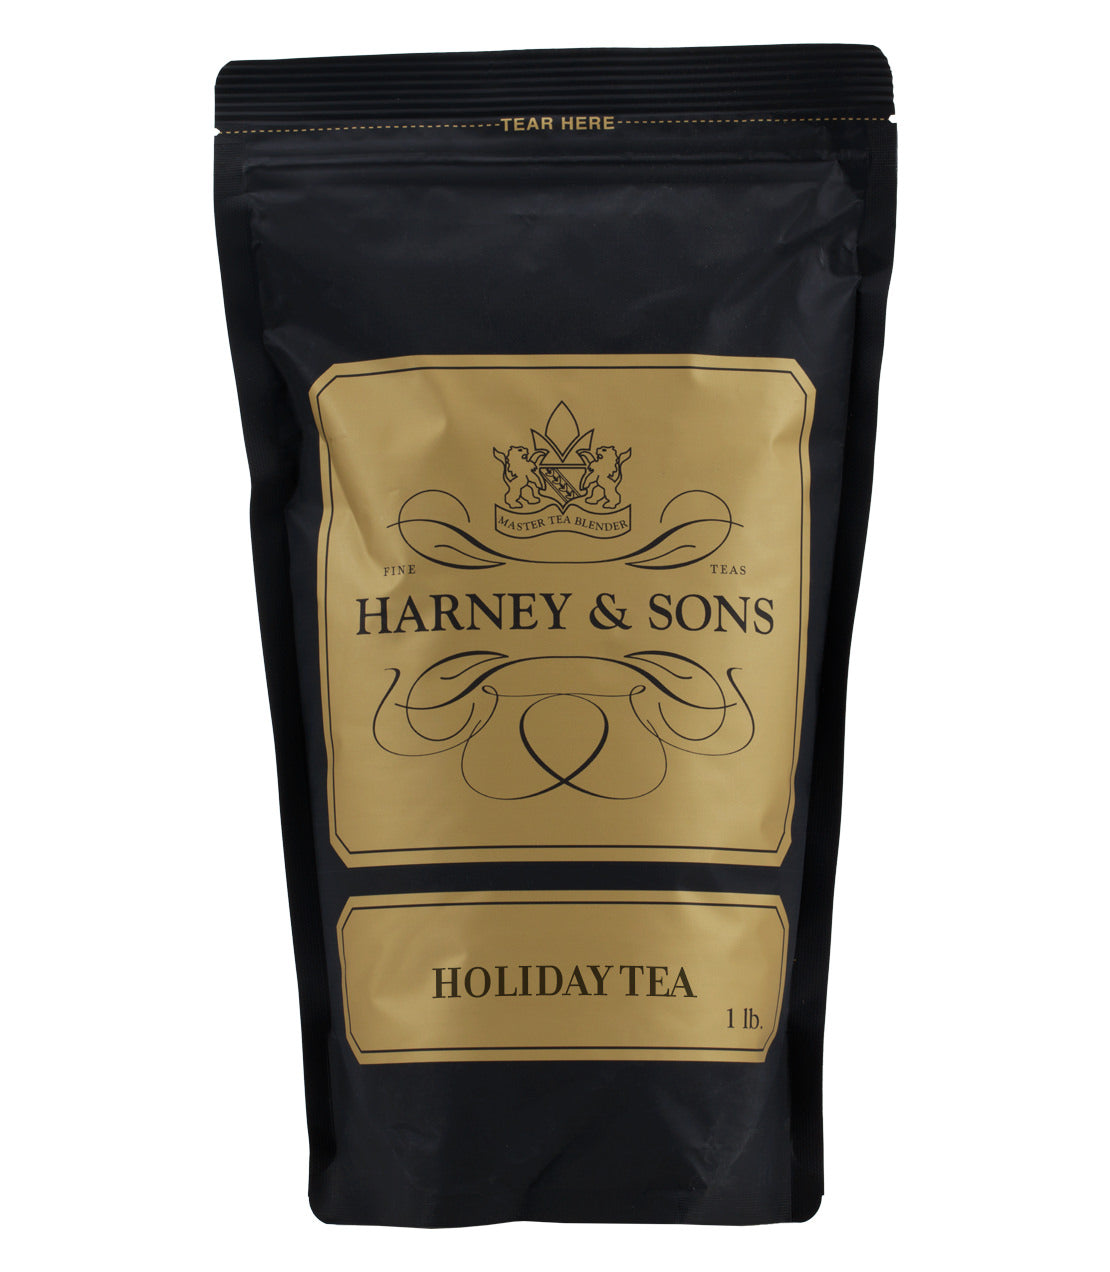 Holiday Tea - Loose 1 lb. Bag - Harney & Sons Fine Teas